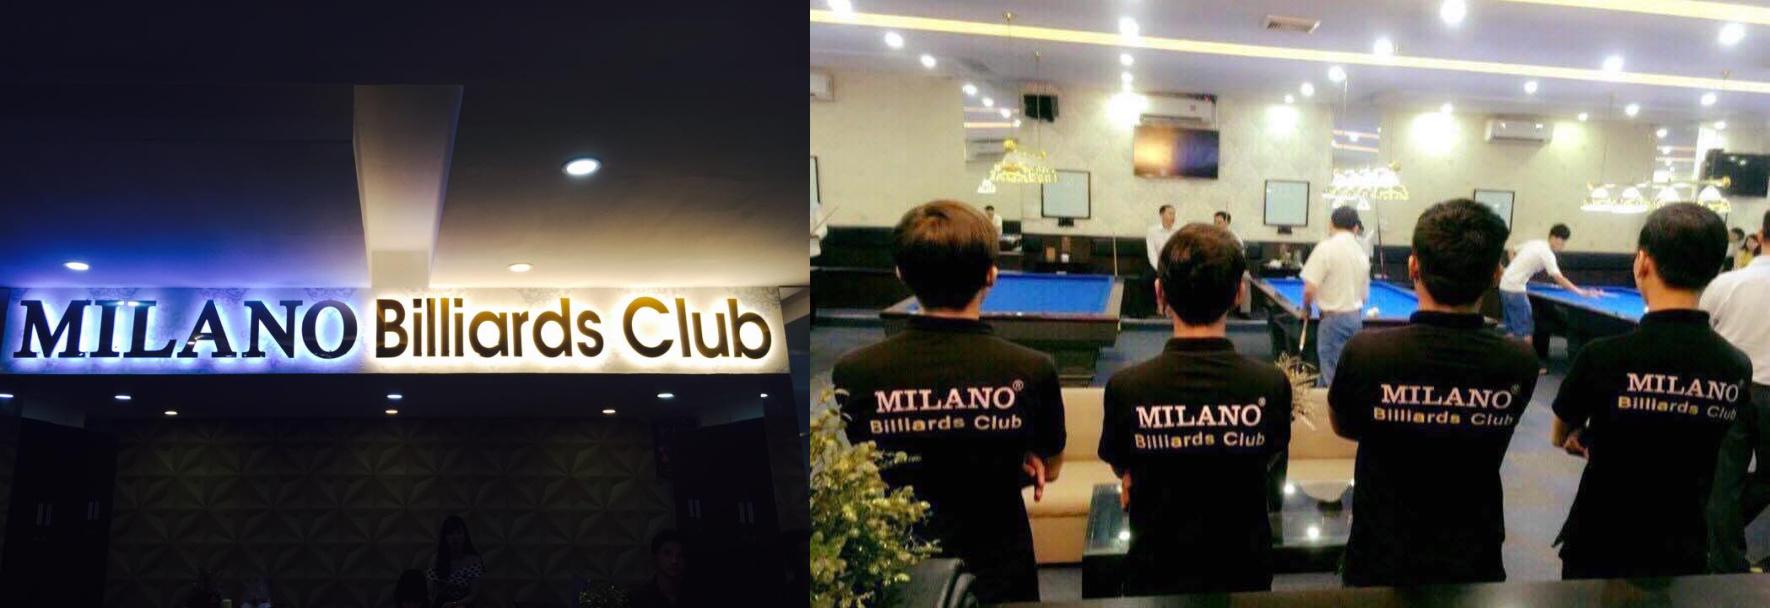 Milano Billiards Club